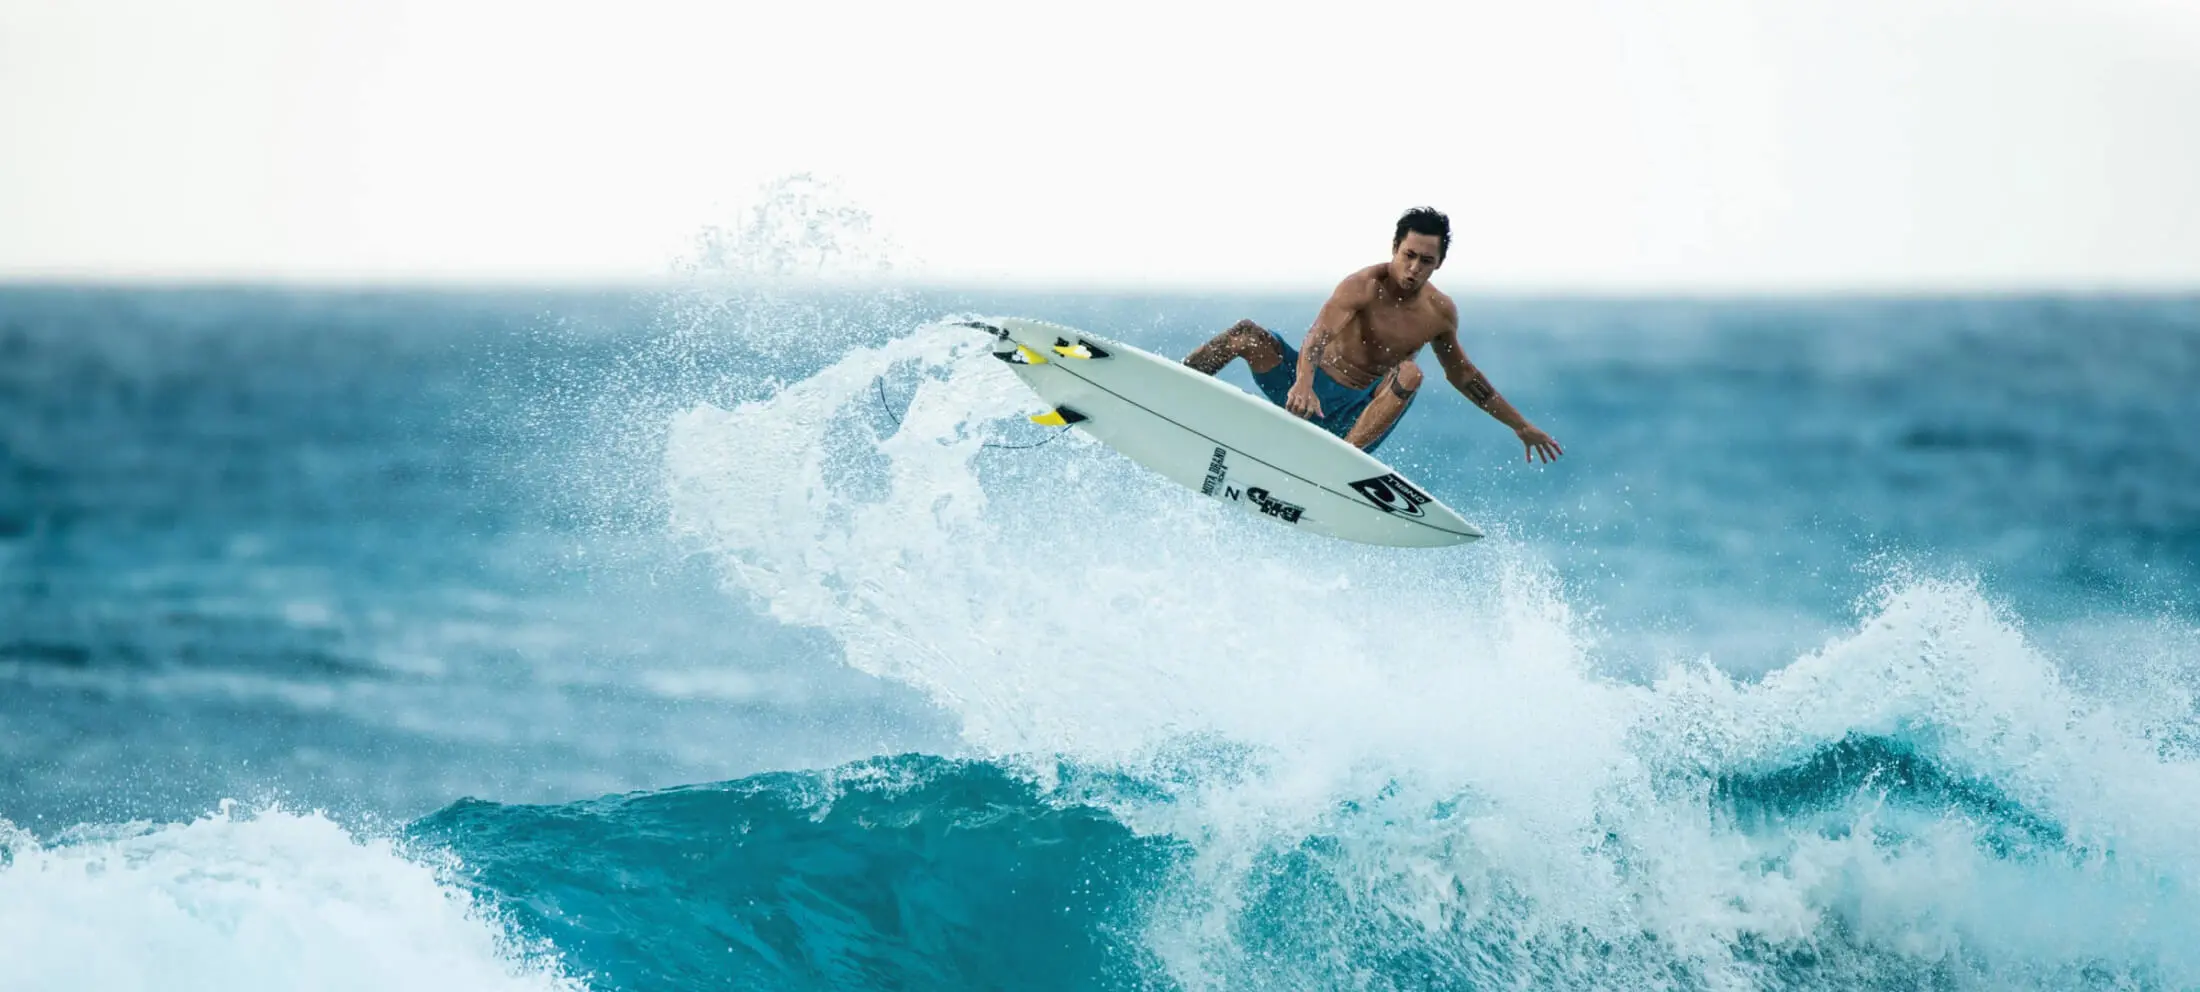 man riding the waves on an oneill surfboard